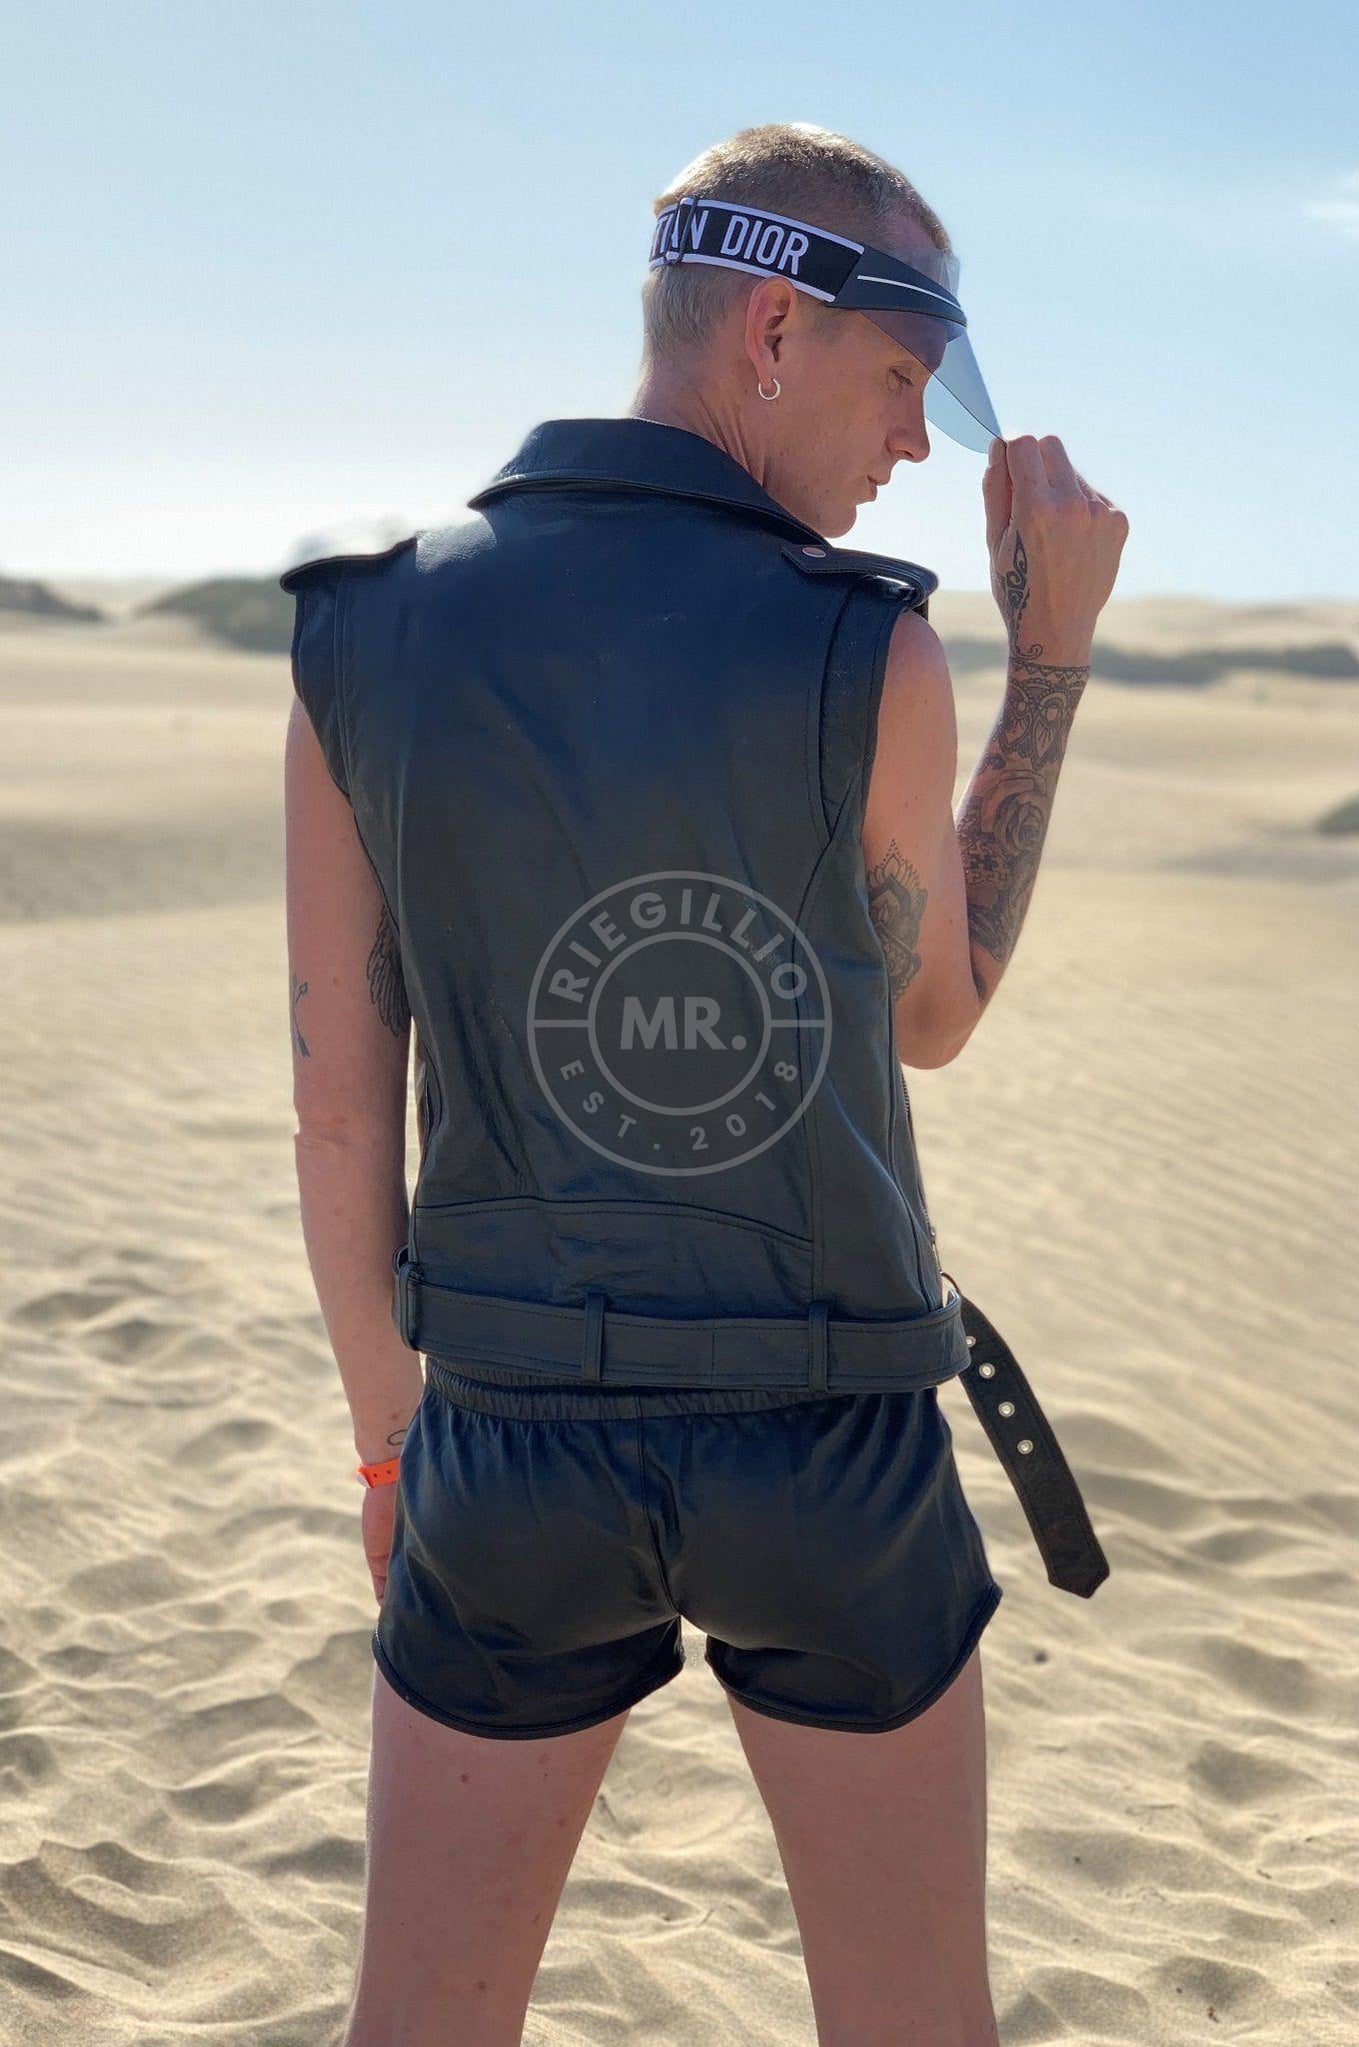 Leather Brando Sleeveless Jacket at MR. Riegillio